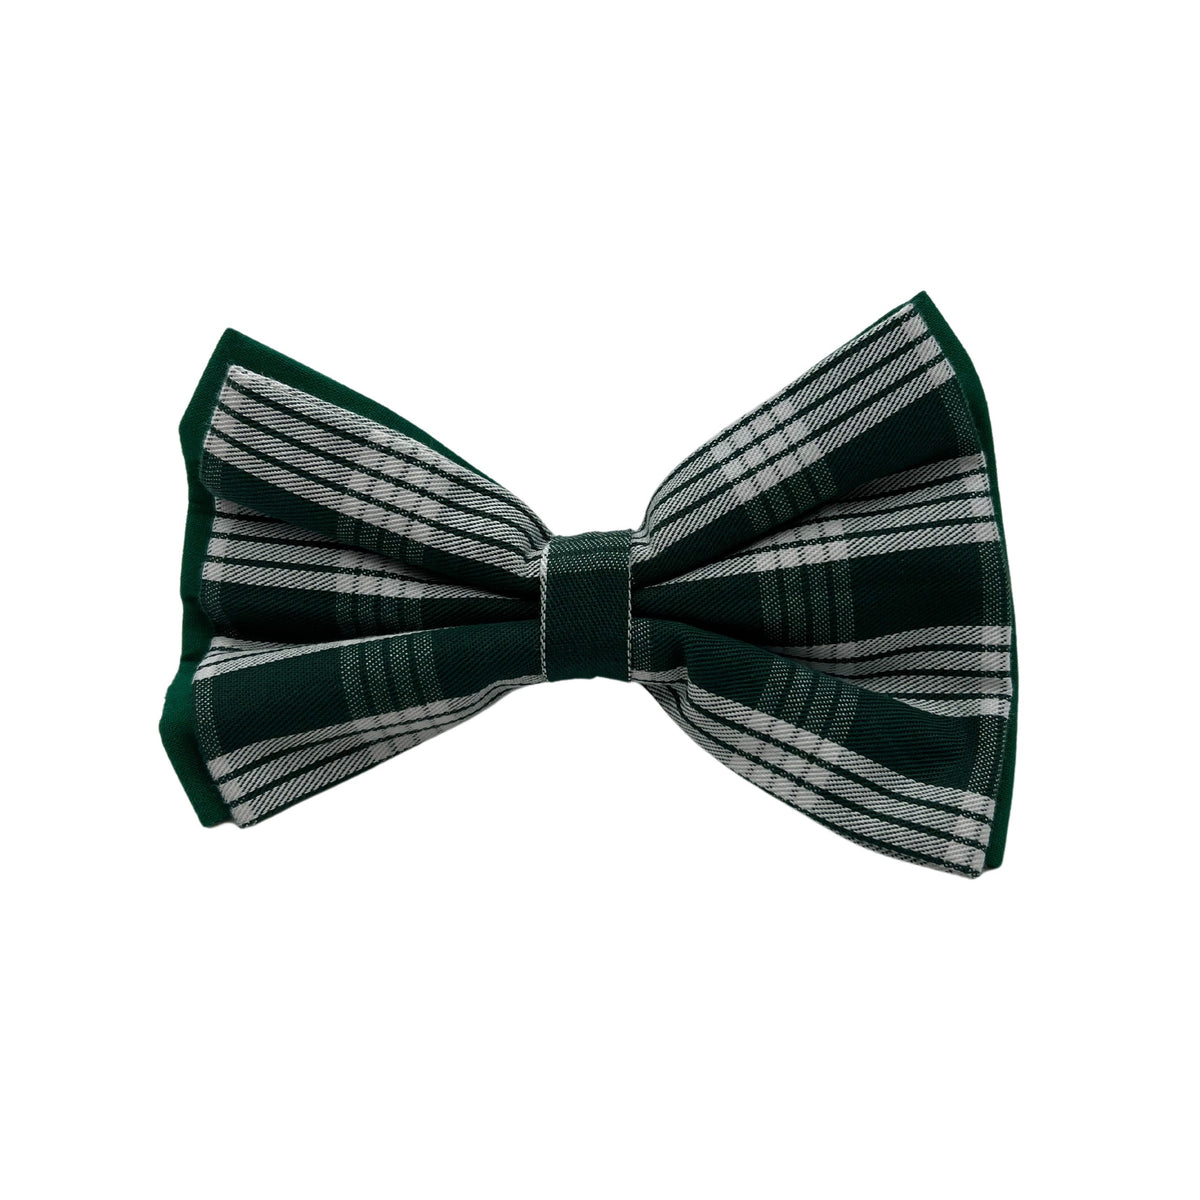 Pop-Up Mākeke - humBOWbarks Pet Wear - Large Double Bow Tie - Green Plaid - Front View